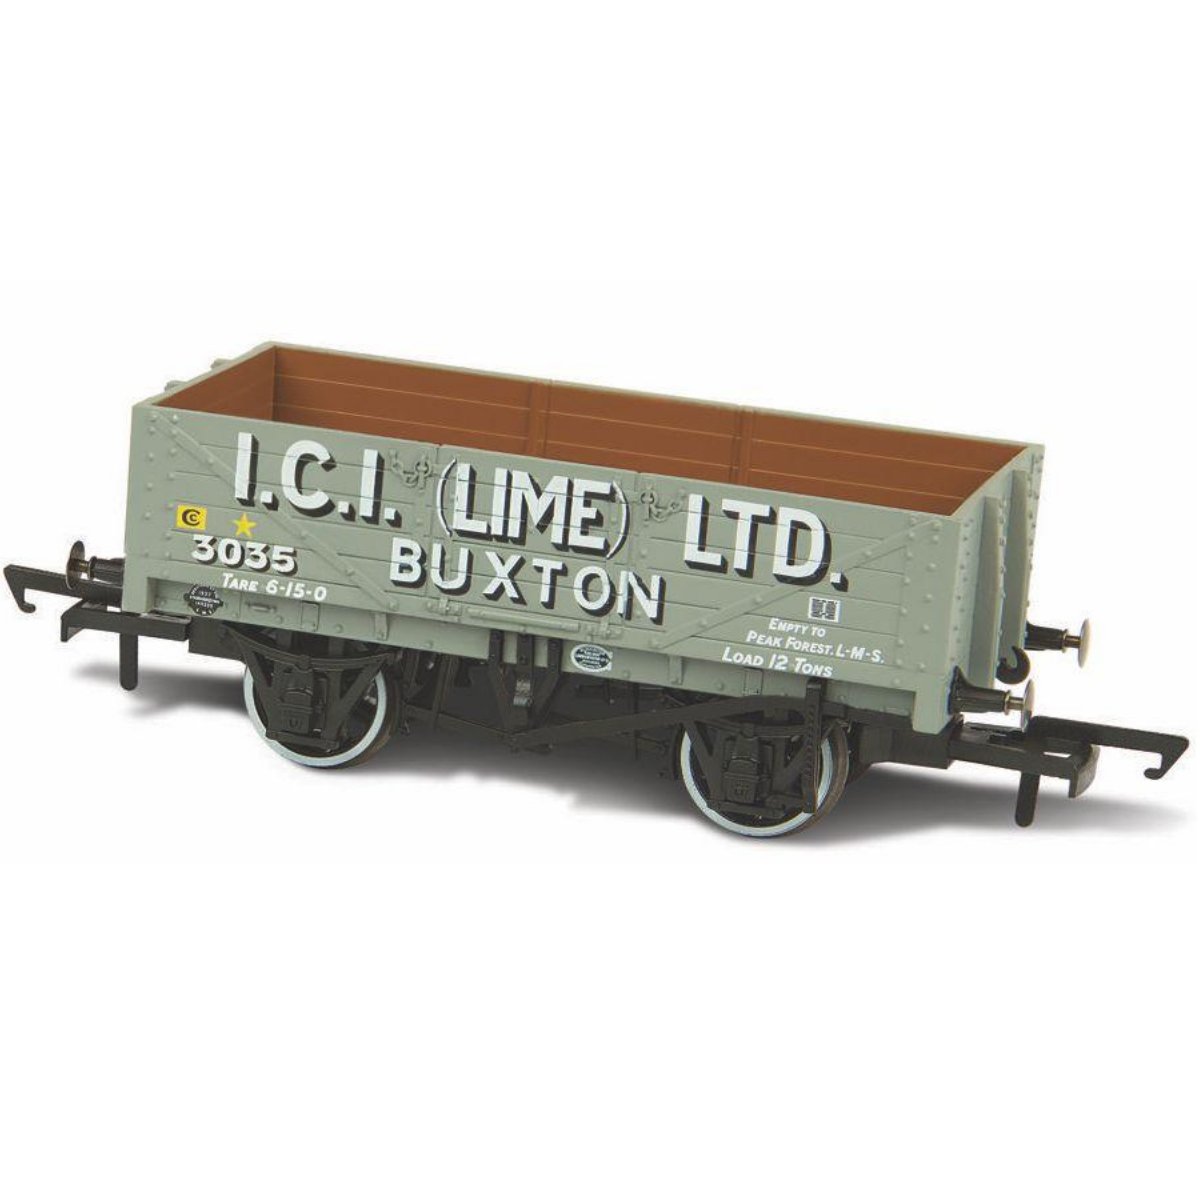 Oxford Rail OR76MW5005 5 Plank Wagon ICI (Lime) Ltd Buxton - Phillips Hobbies